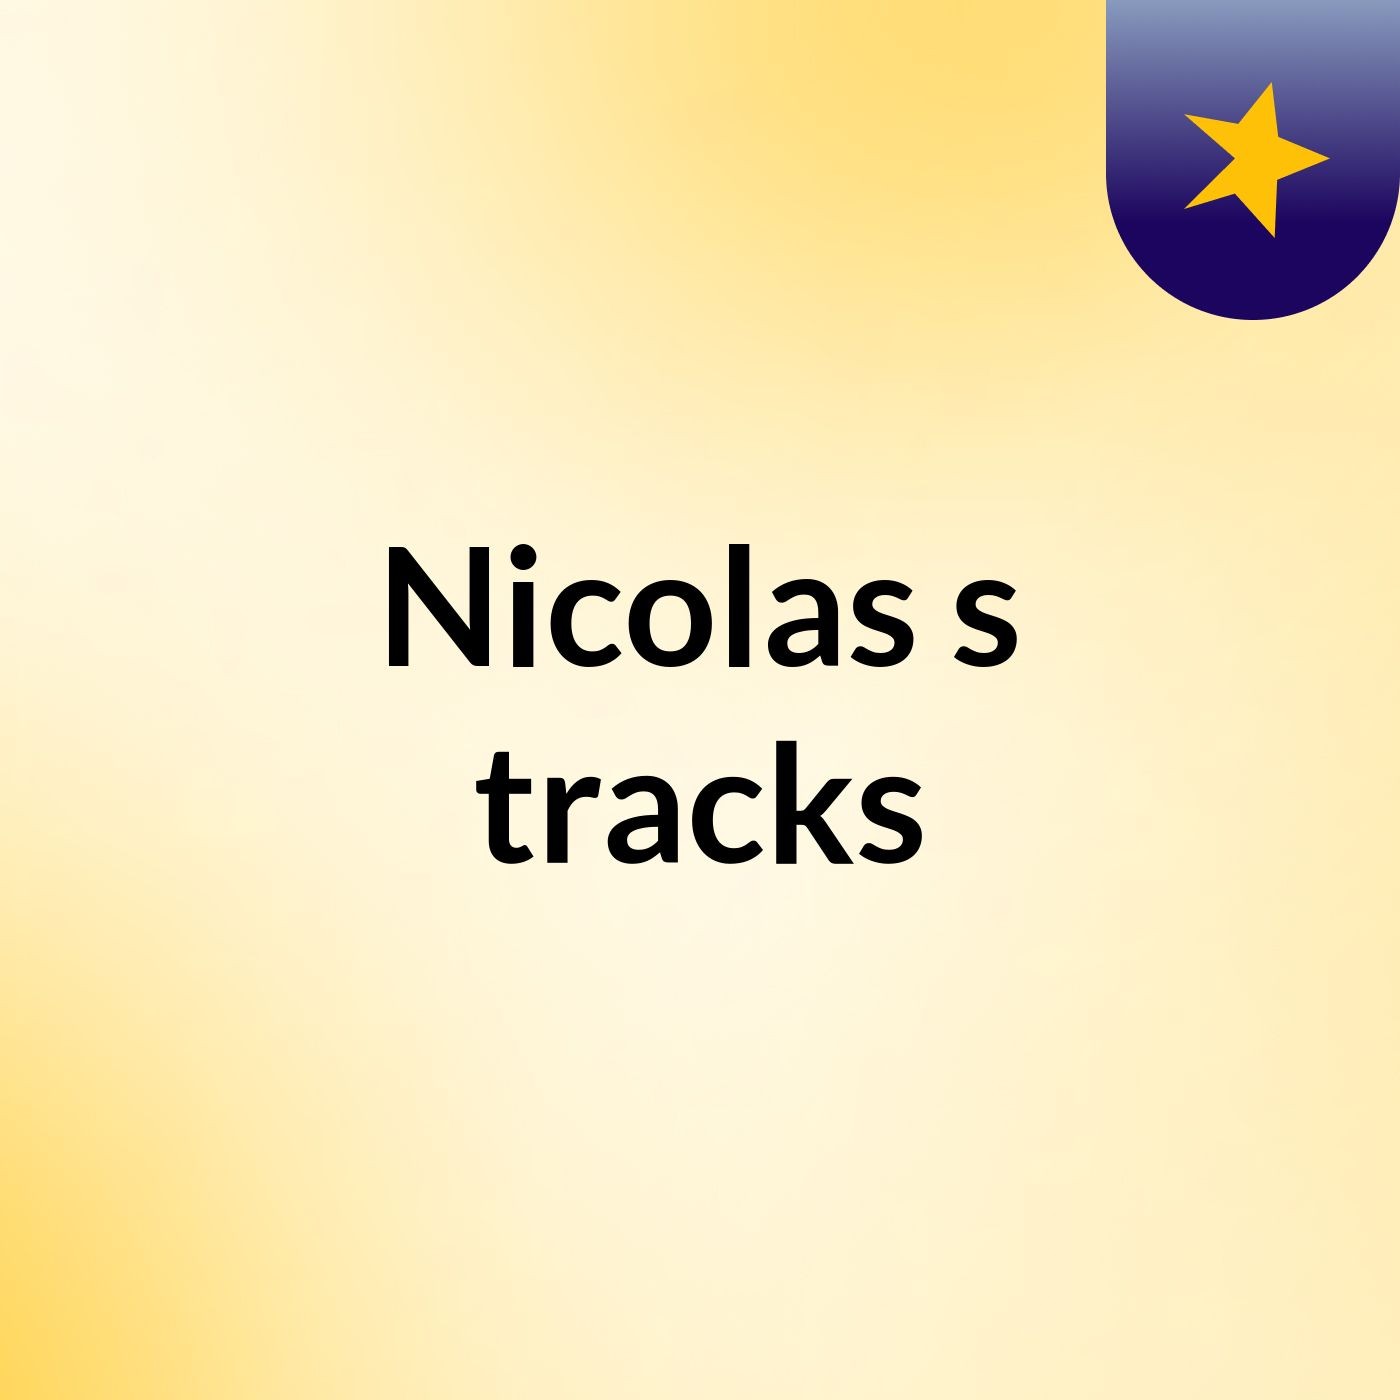 Nicolas's tracks